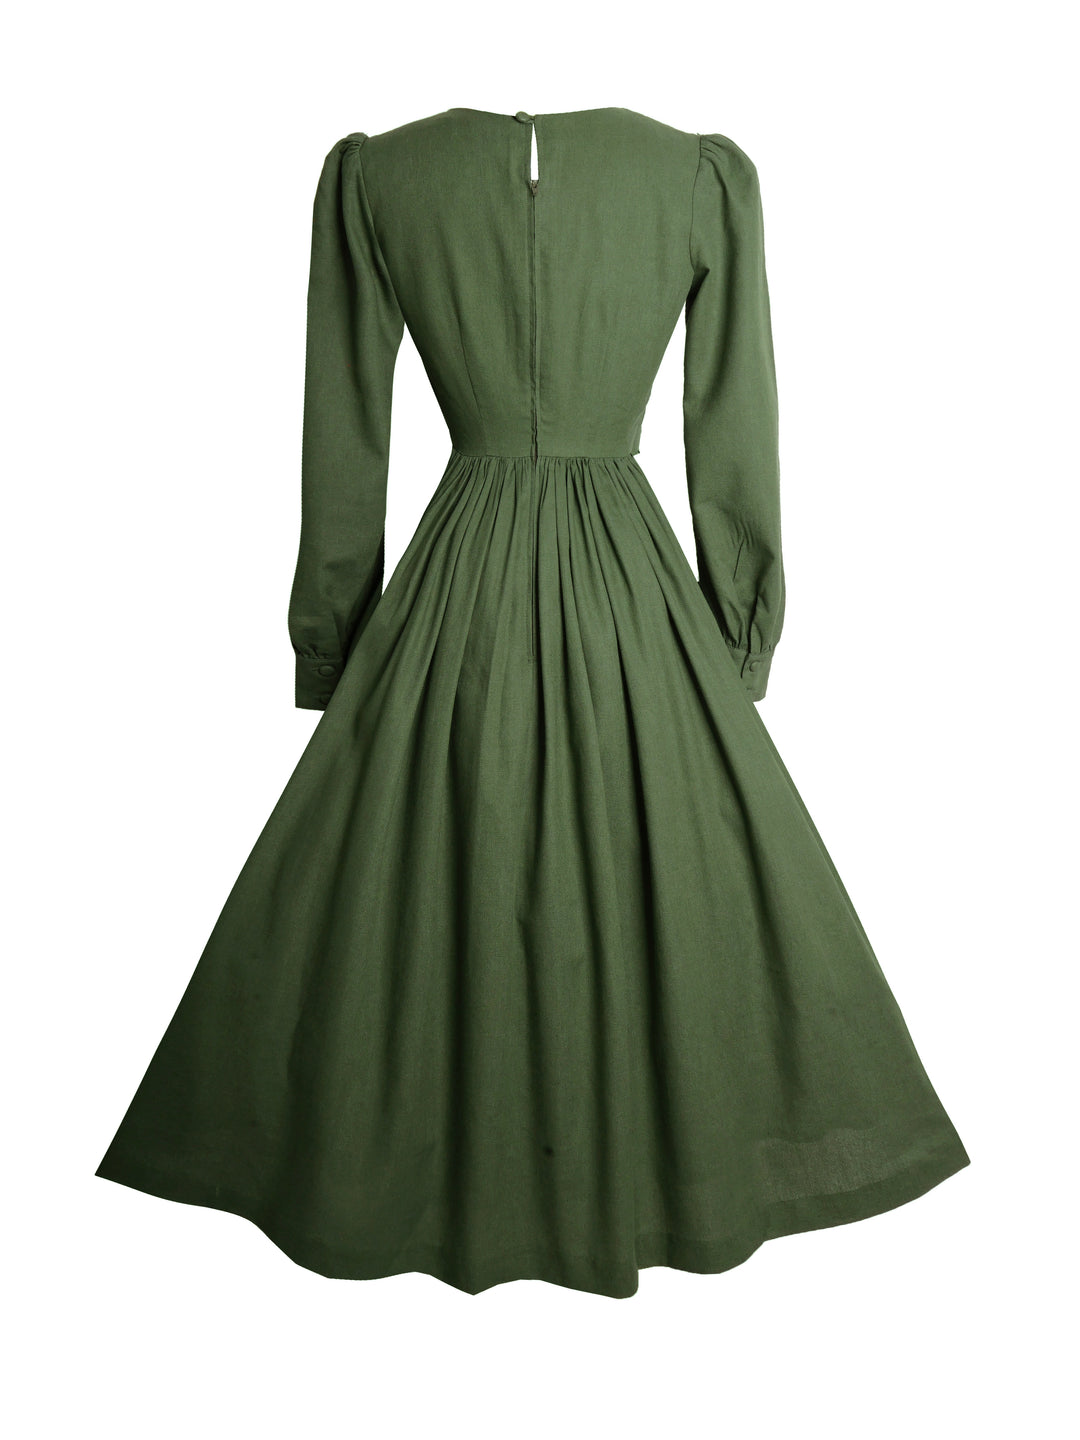 MTO - Agnes Dress in Hunters Green Linen